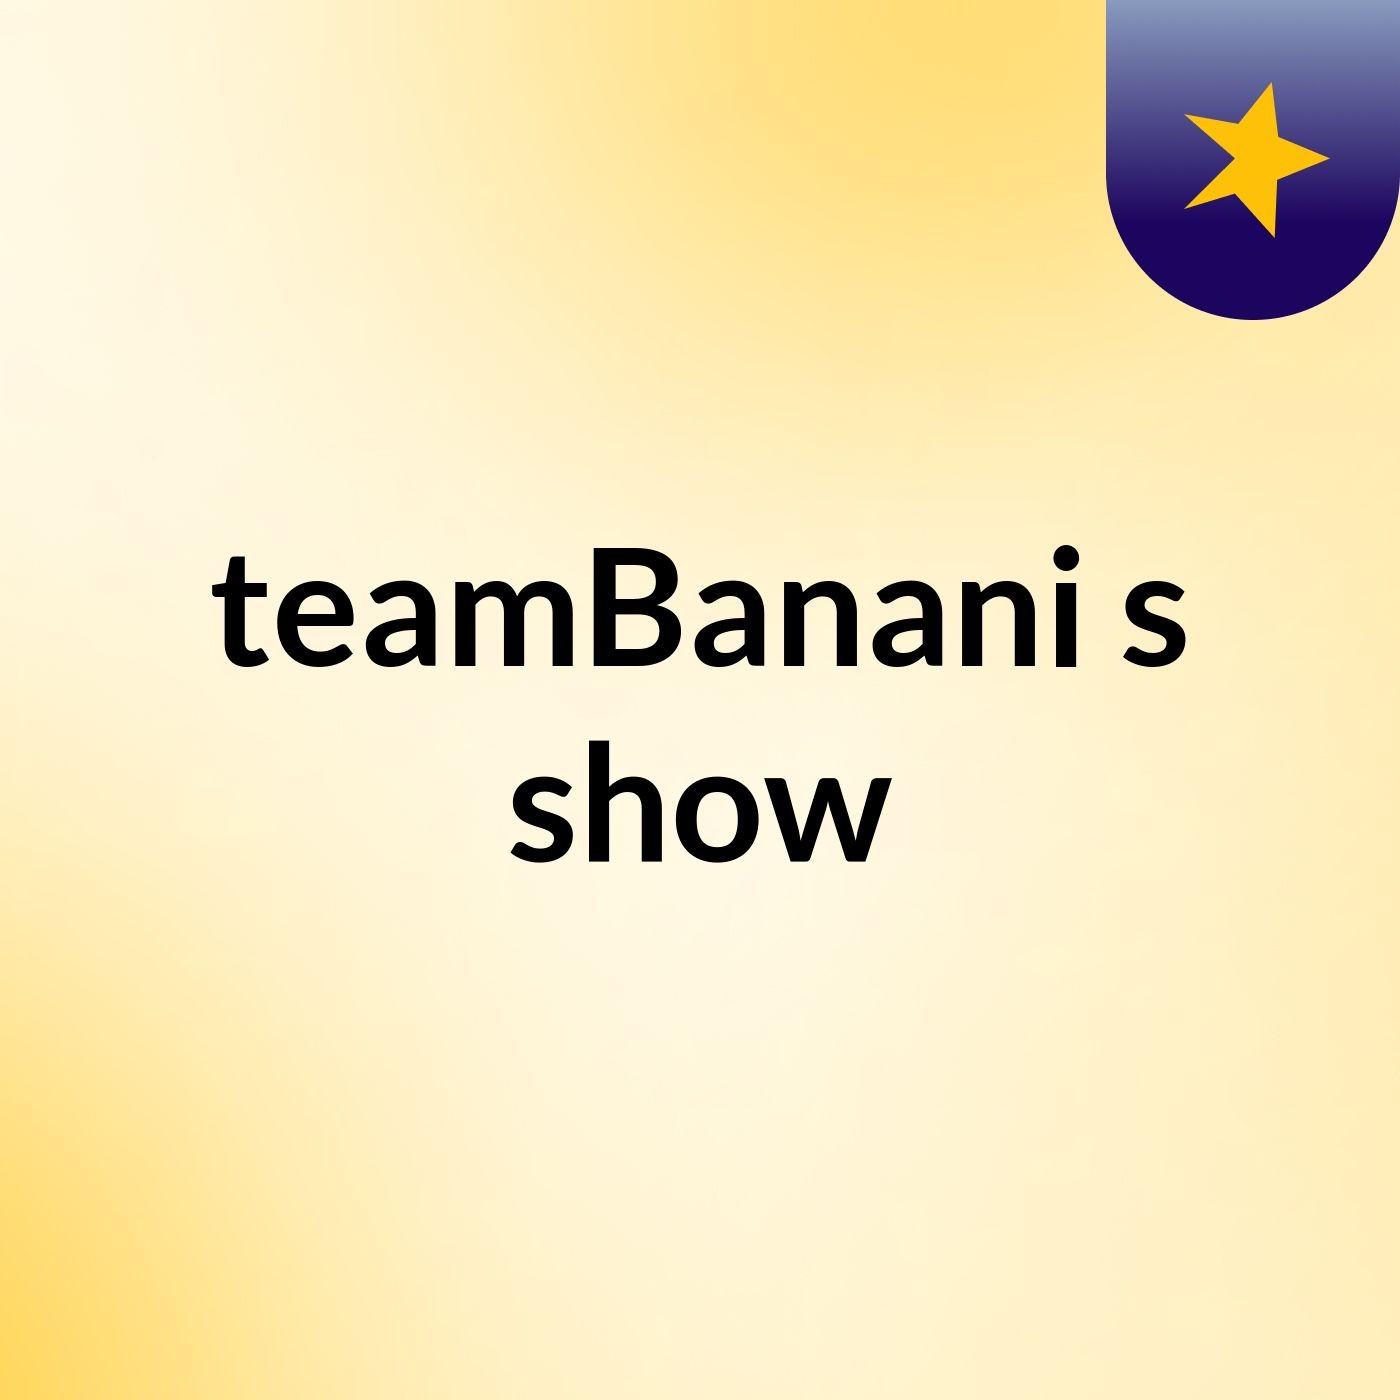 teamBanani's show